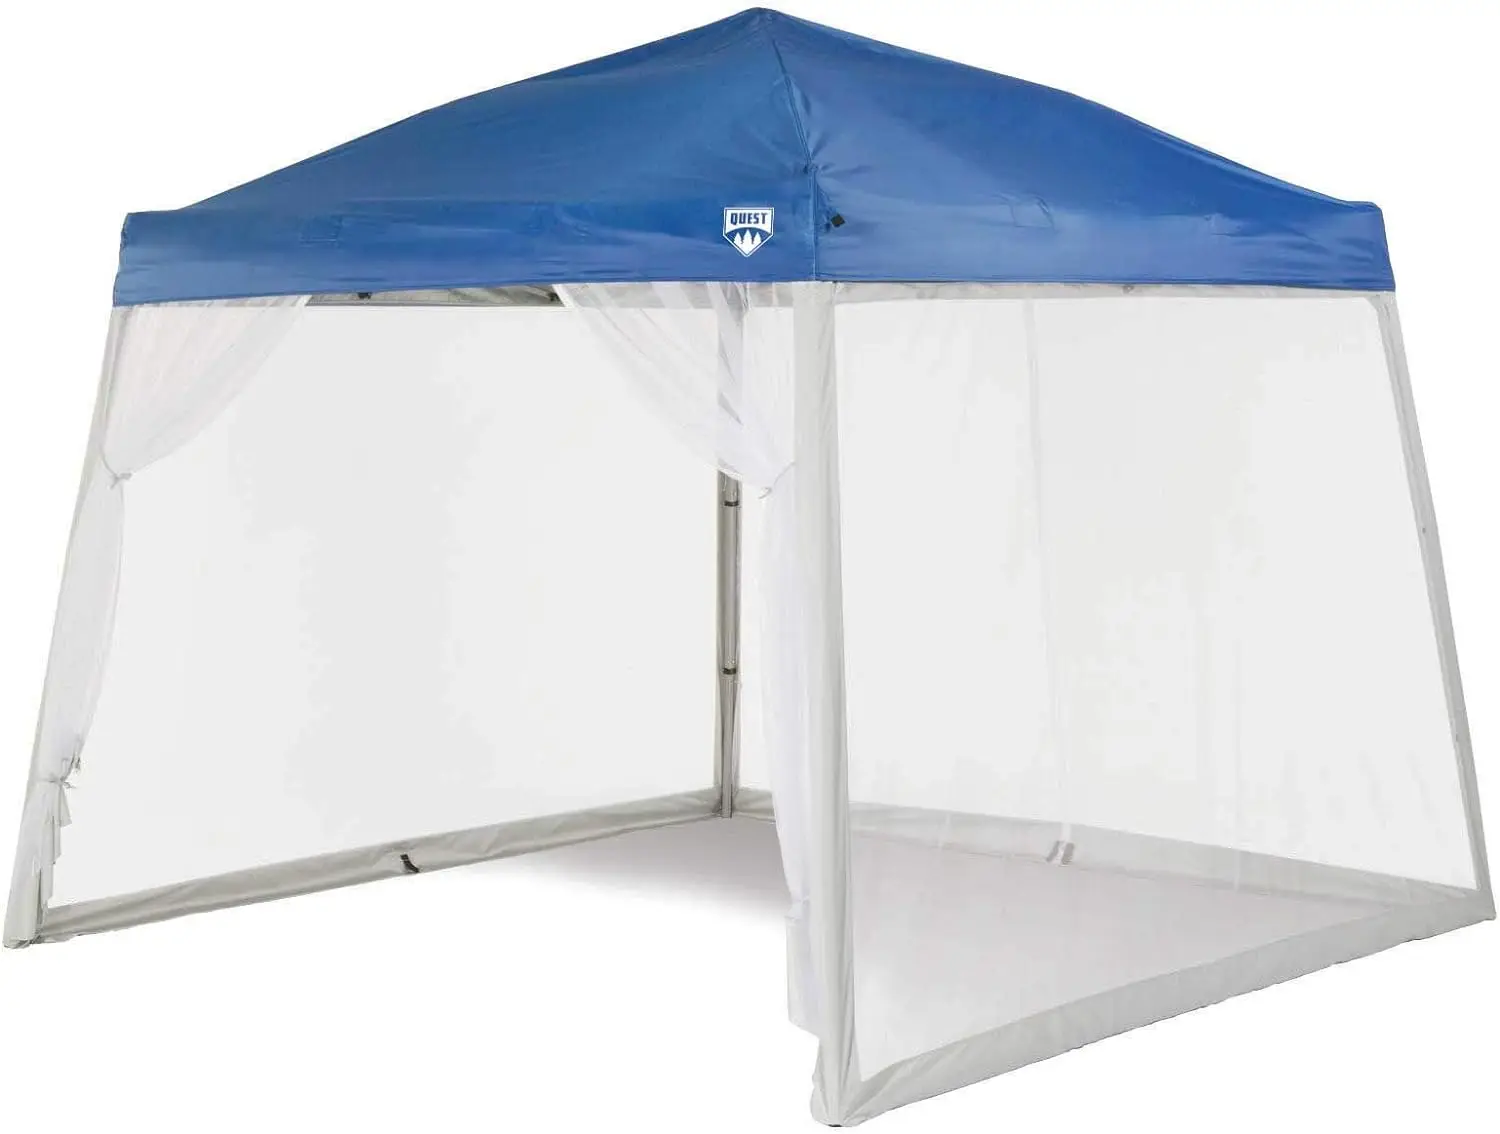 

Ft. X 10 Ft. Mesh Screen for Slant Leg Instant Ez up Pop up Recreational Canopy Tent (No Color)